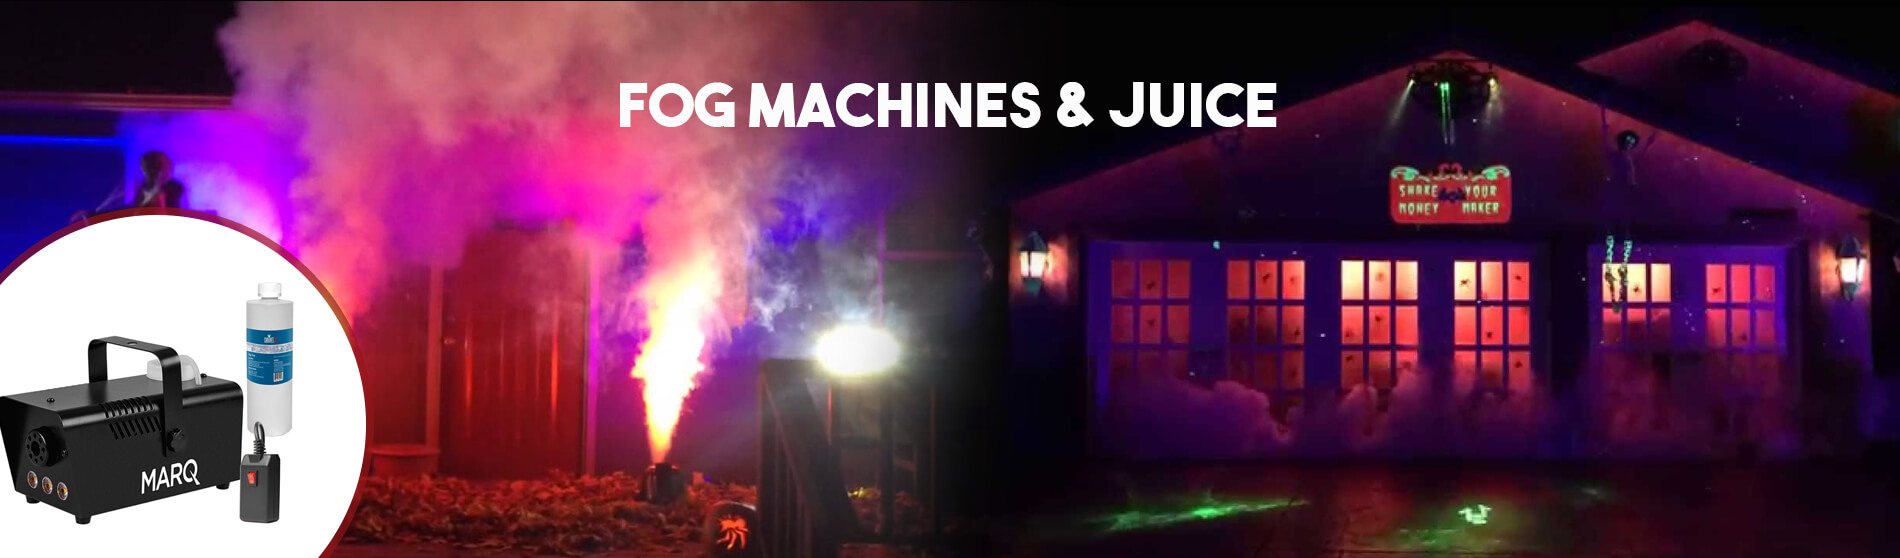 Glendale Halloween : Fog-Machines-And-Juice